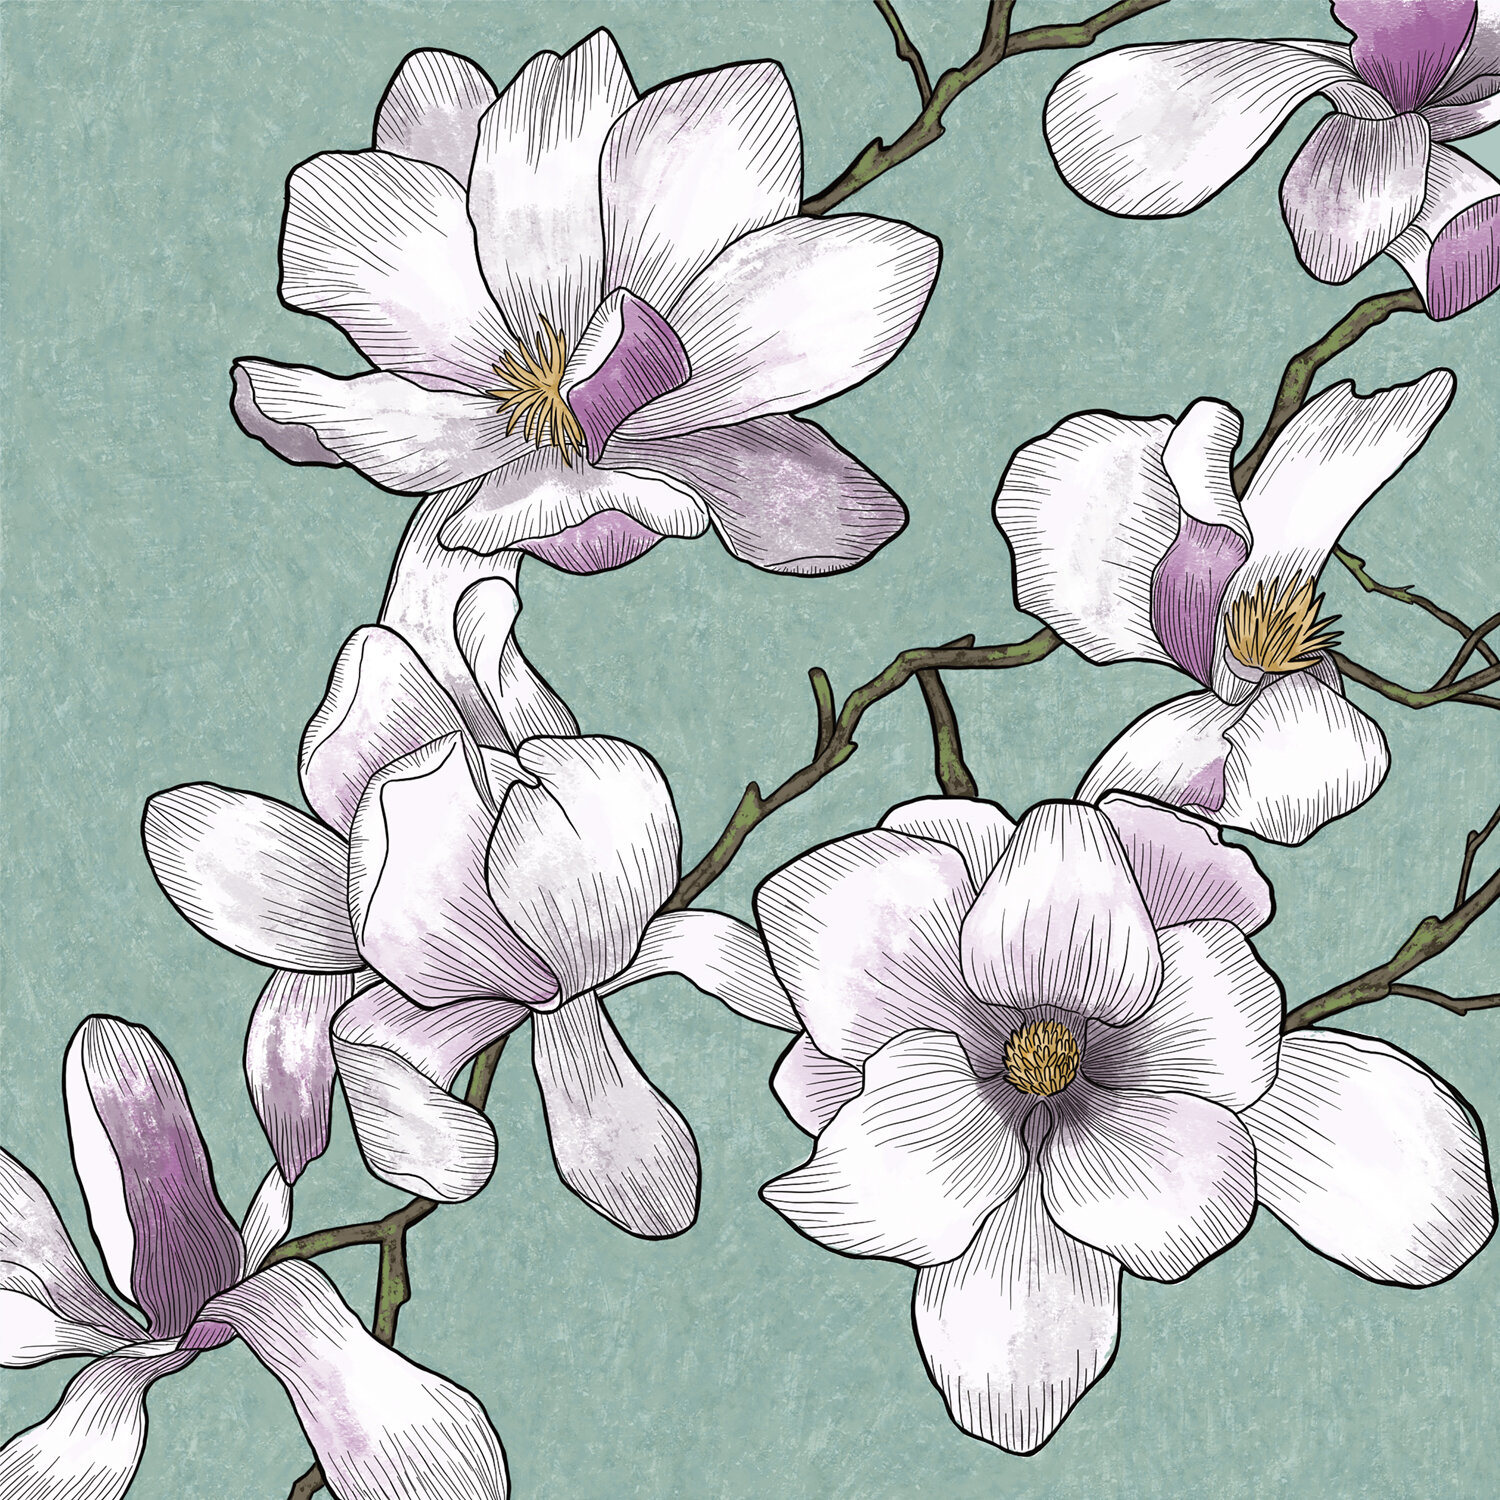 Magnolias.jpg